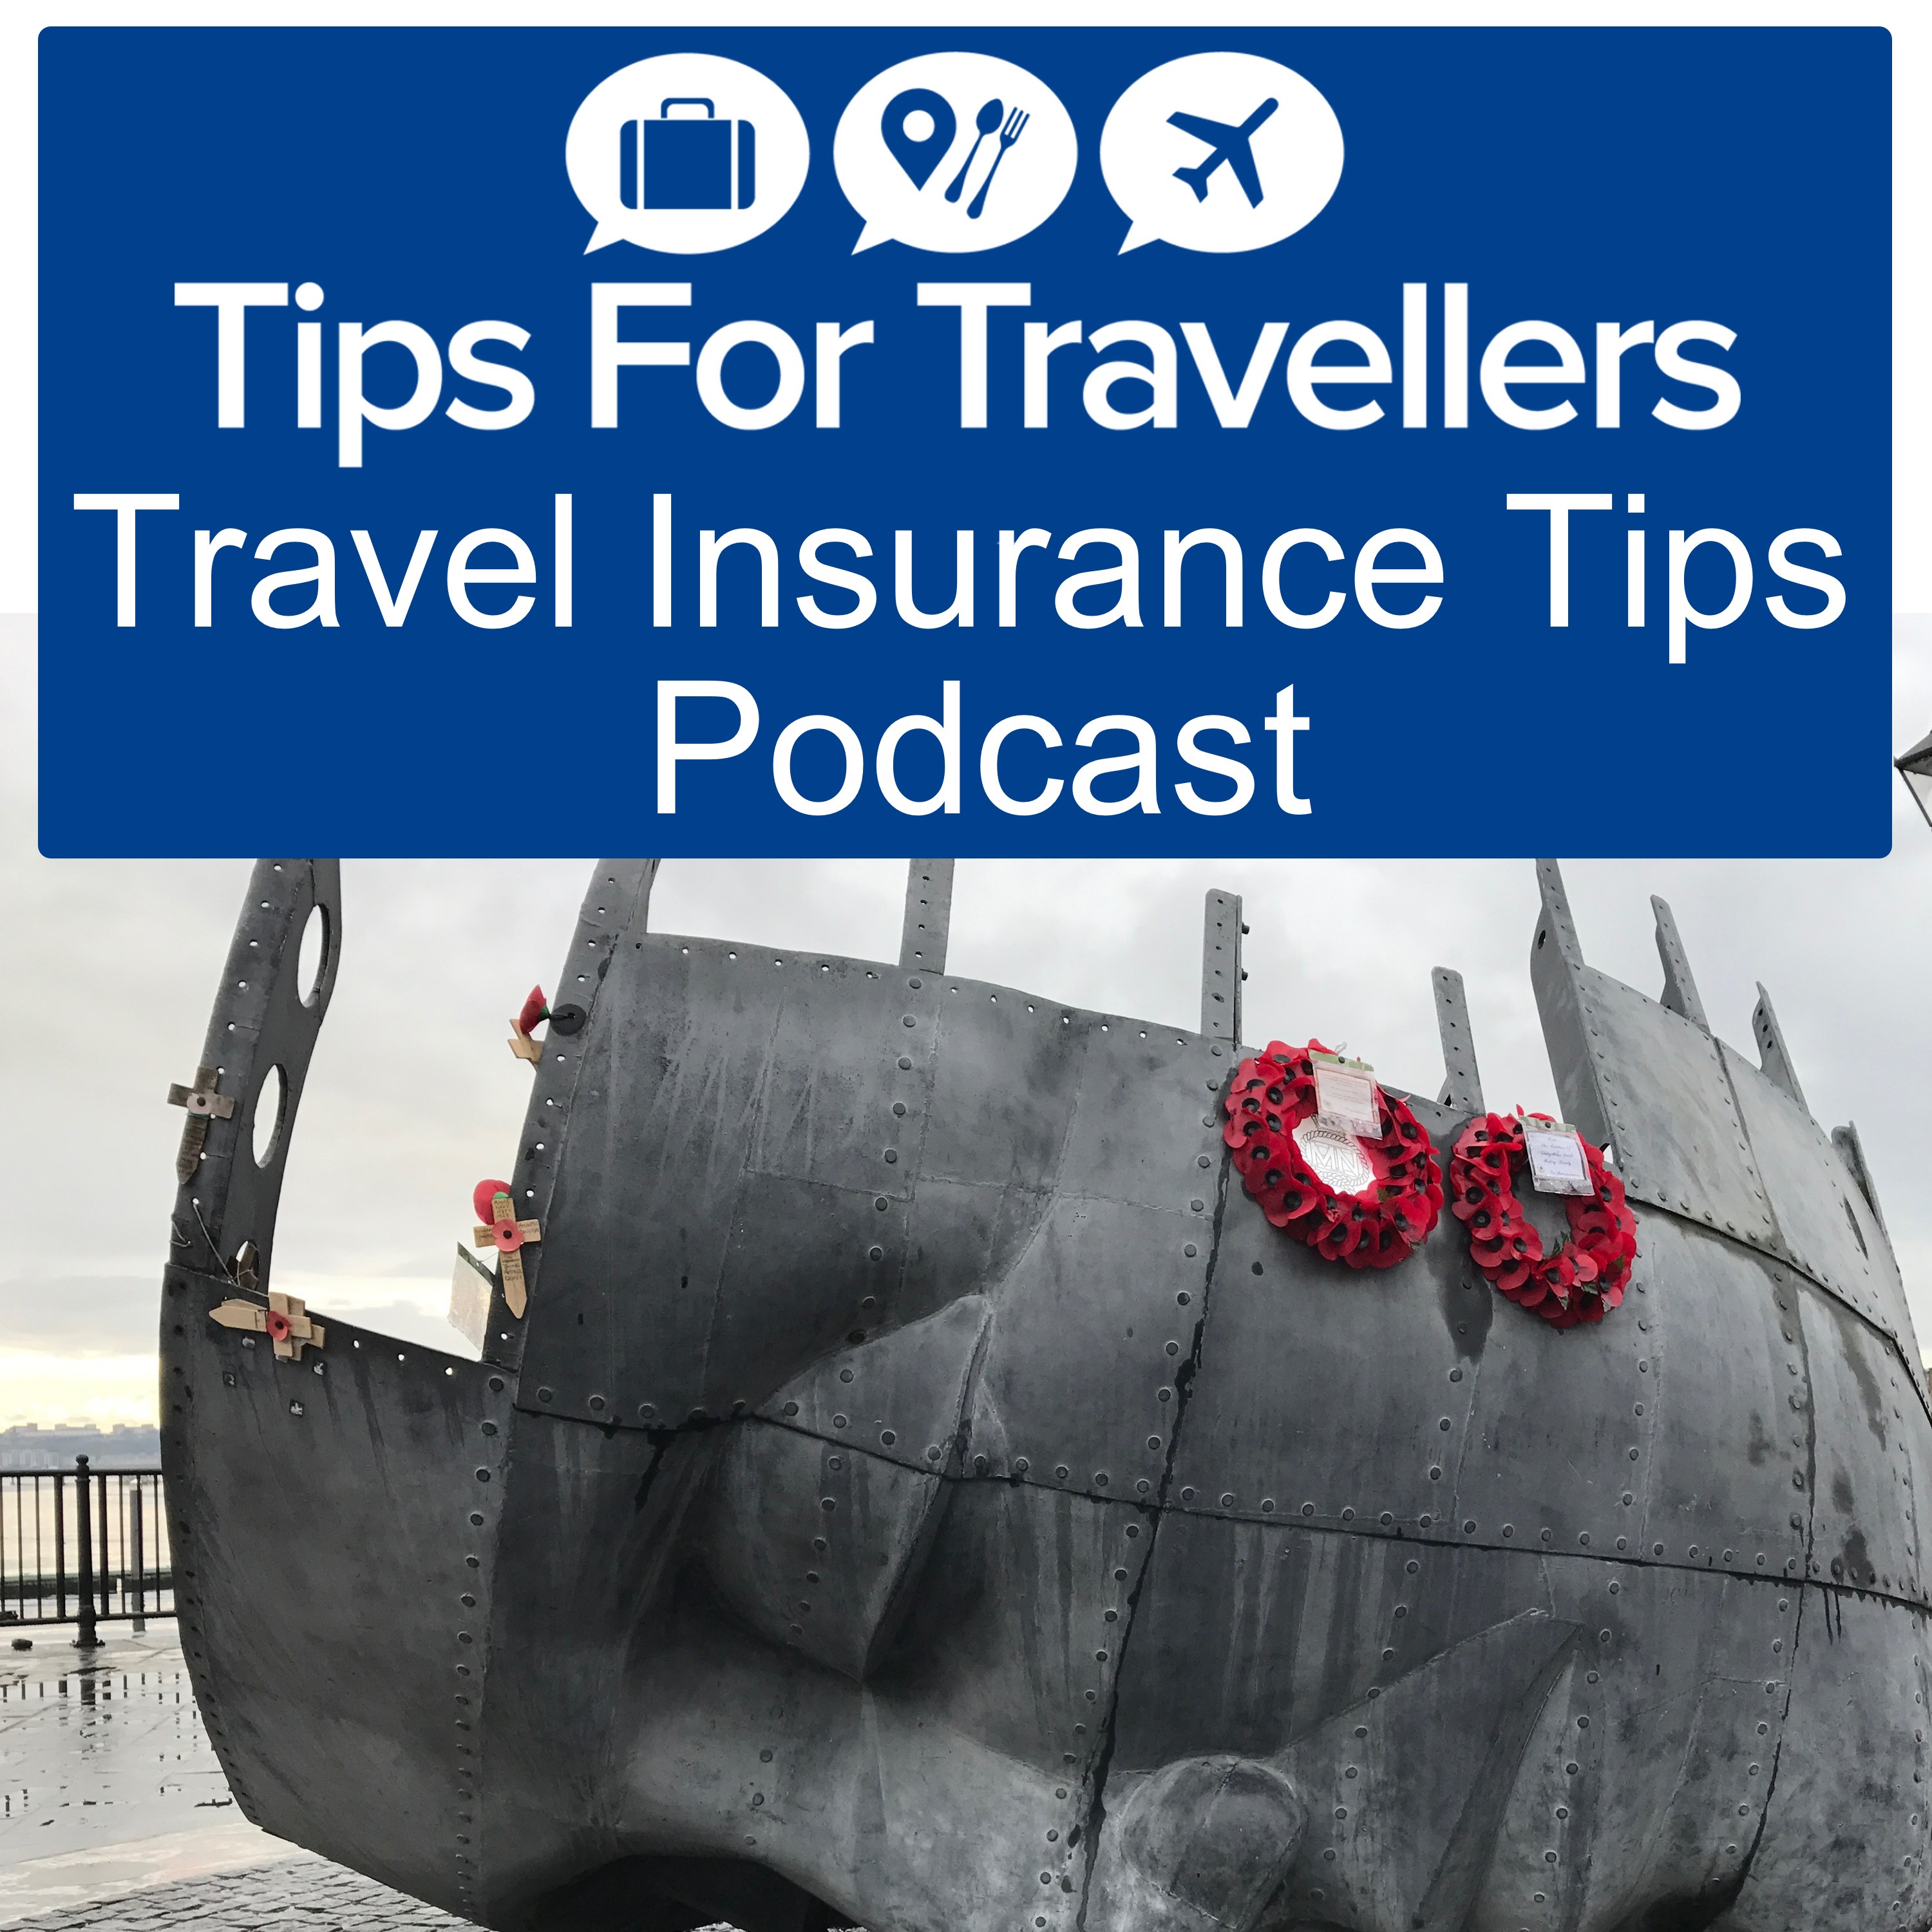 Travel Insurance Tips For Travellers Podcast